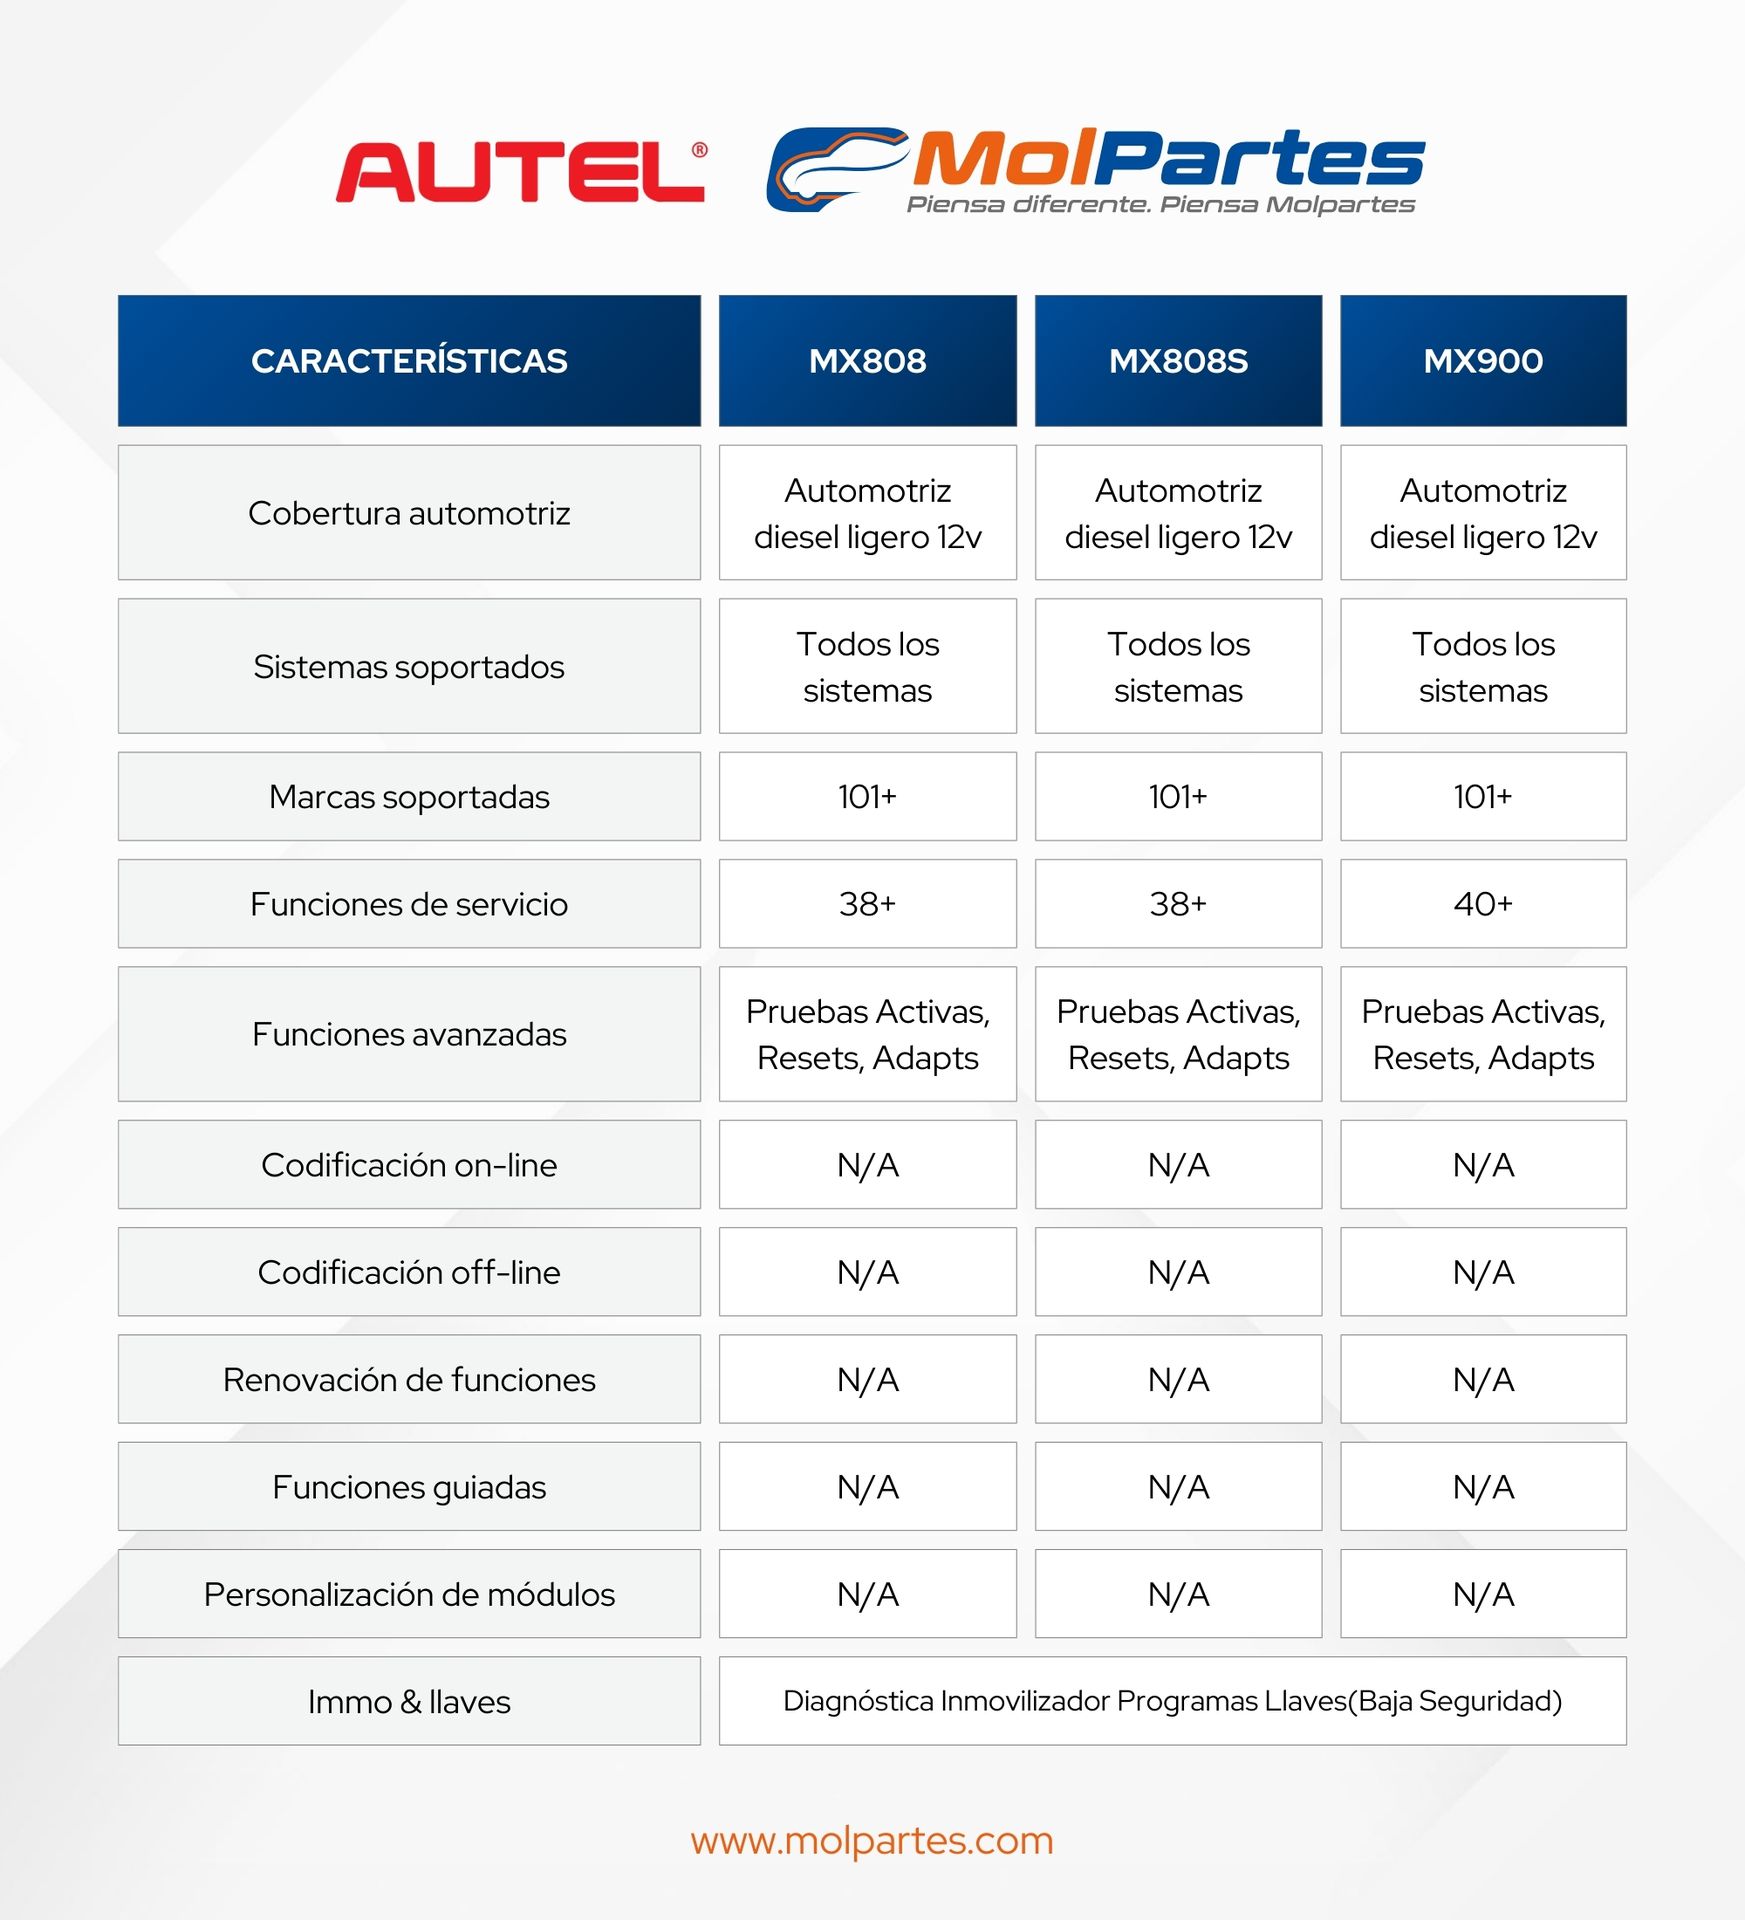 Comparación Autel - MX808 MX808S MX900